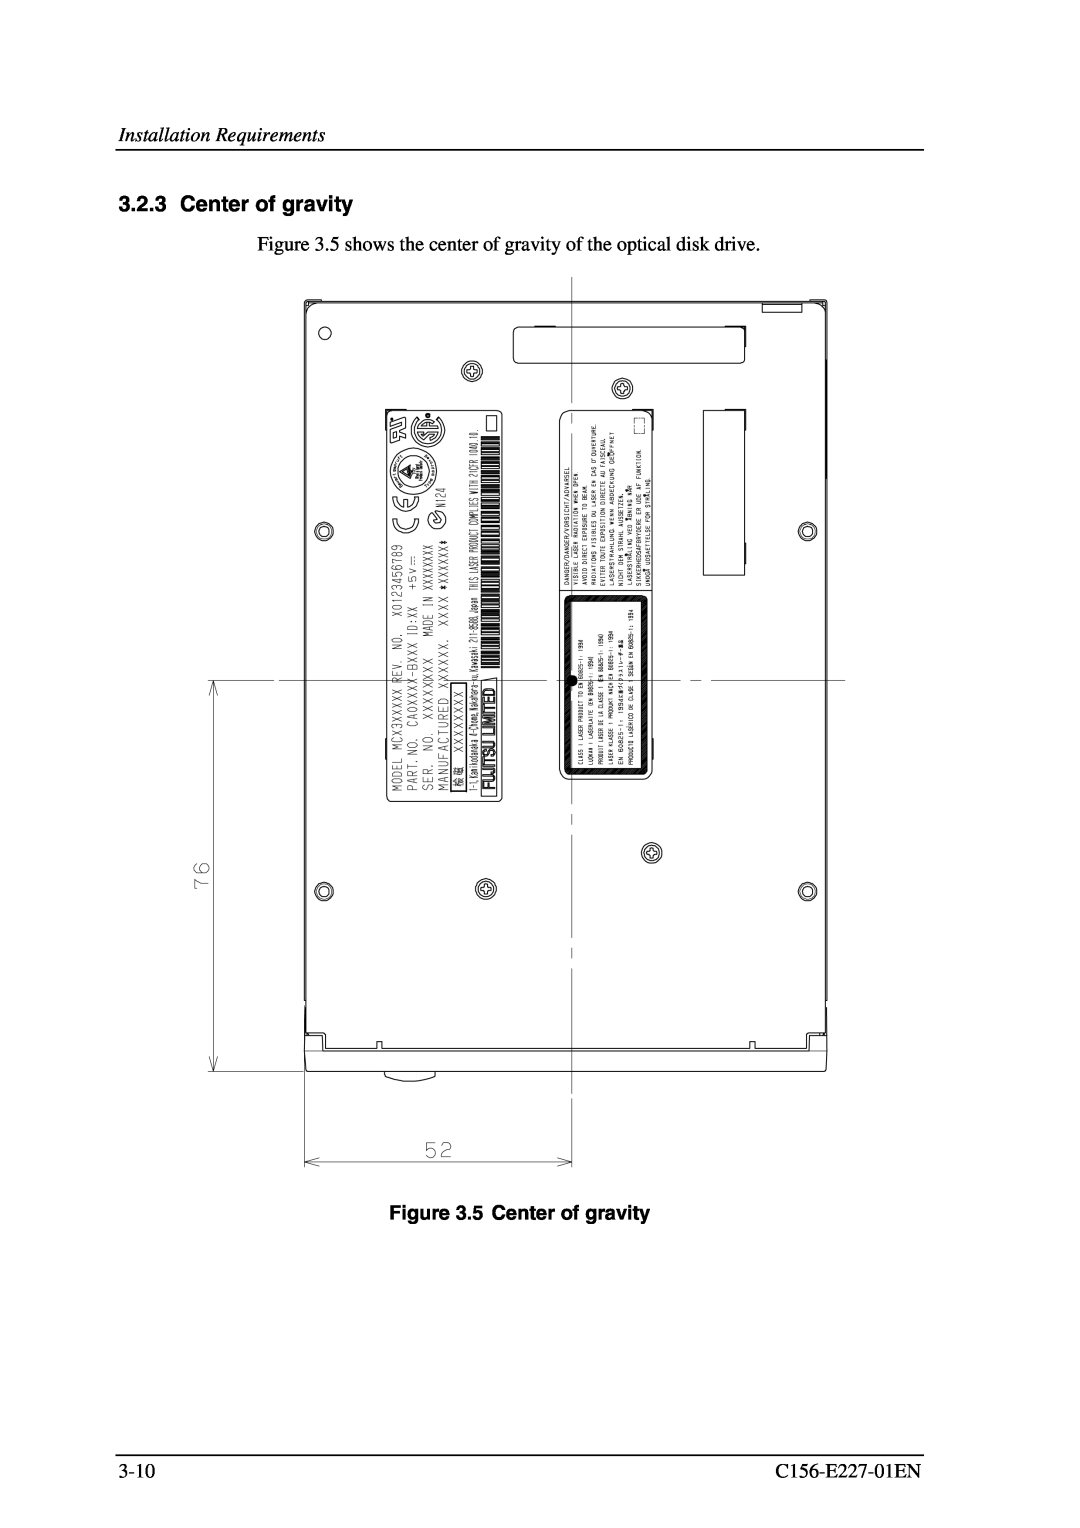 Fujitsu MCM3064AP, MCM3130AP manual 5 Center of gravity, Installation Requirements 